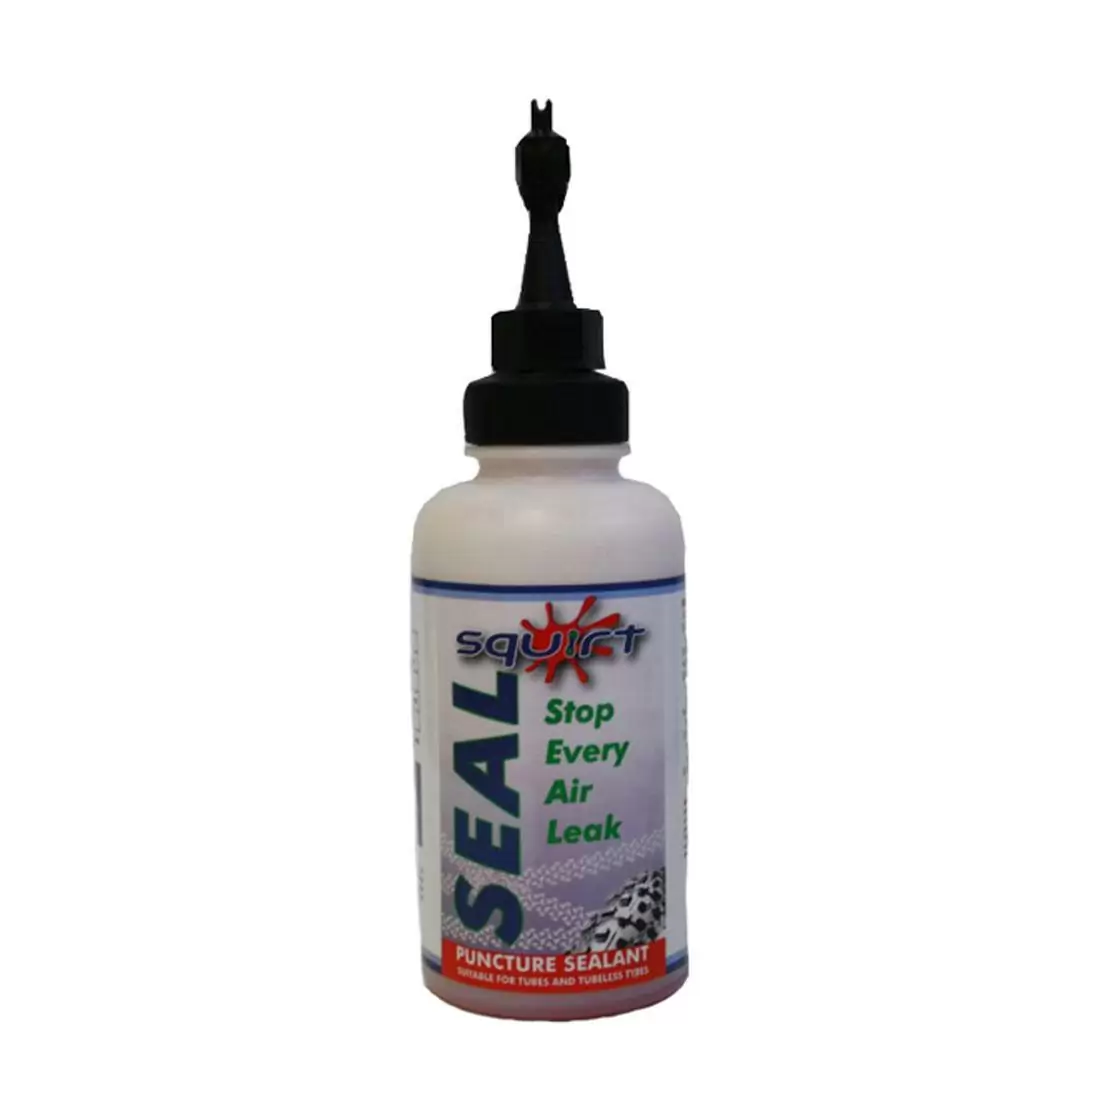 Sealant anti leak and puncture 200 ml - image